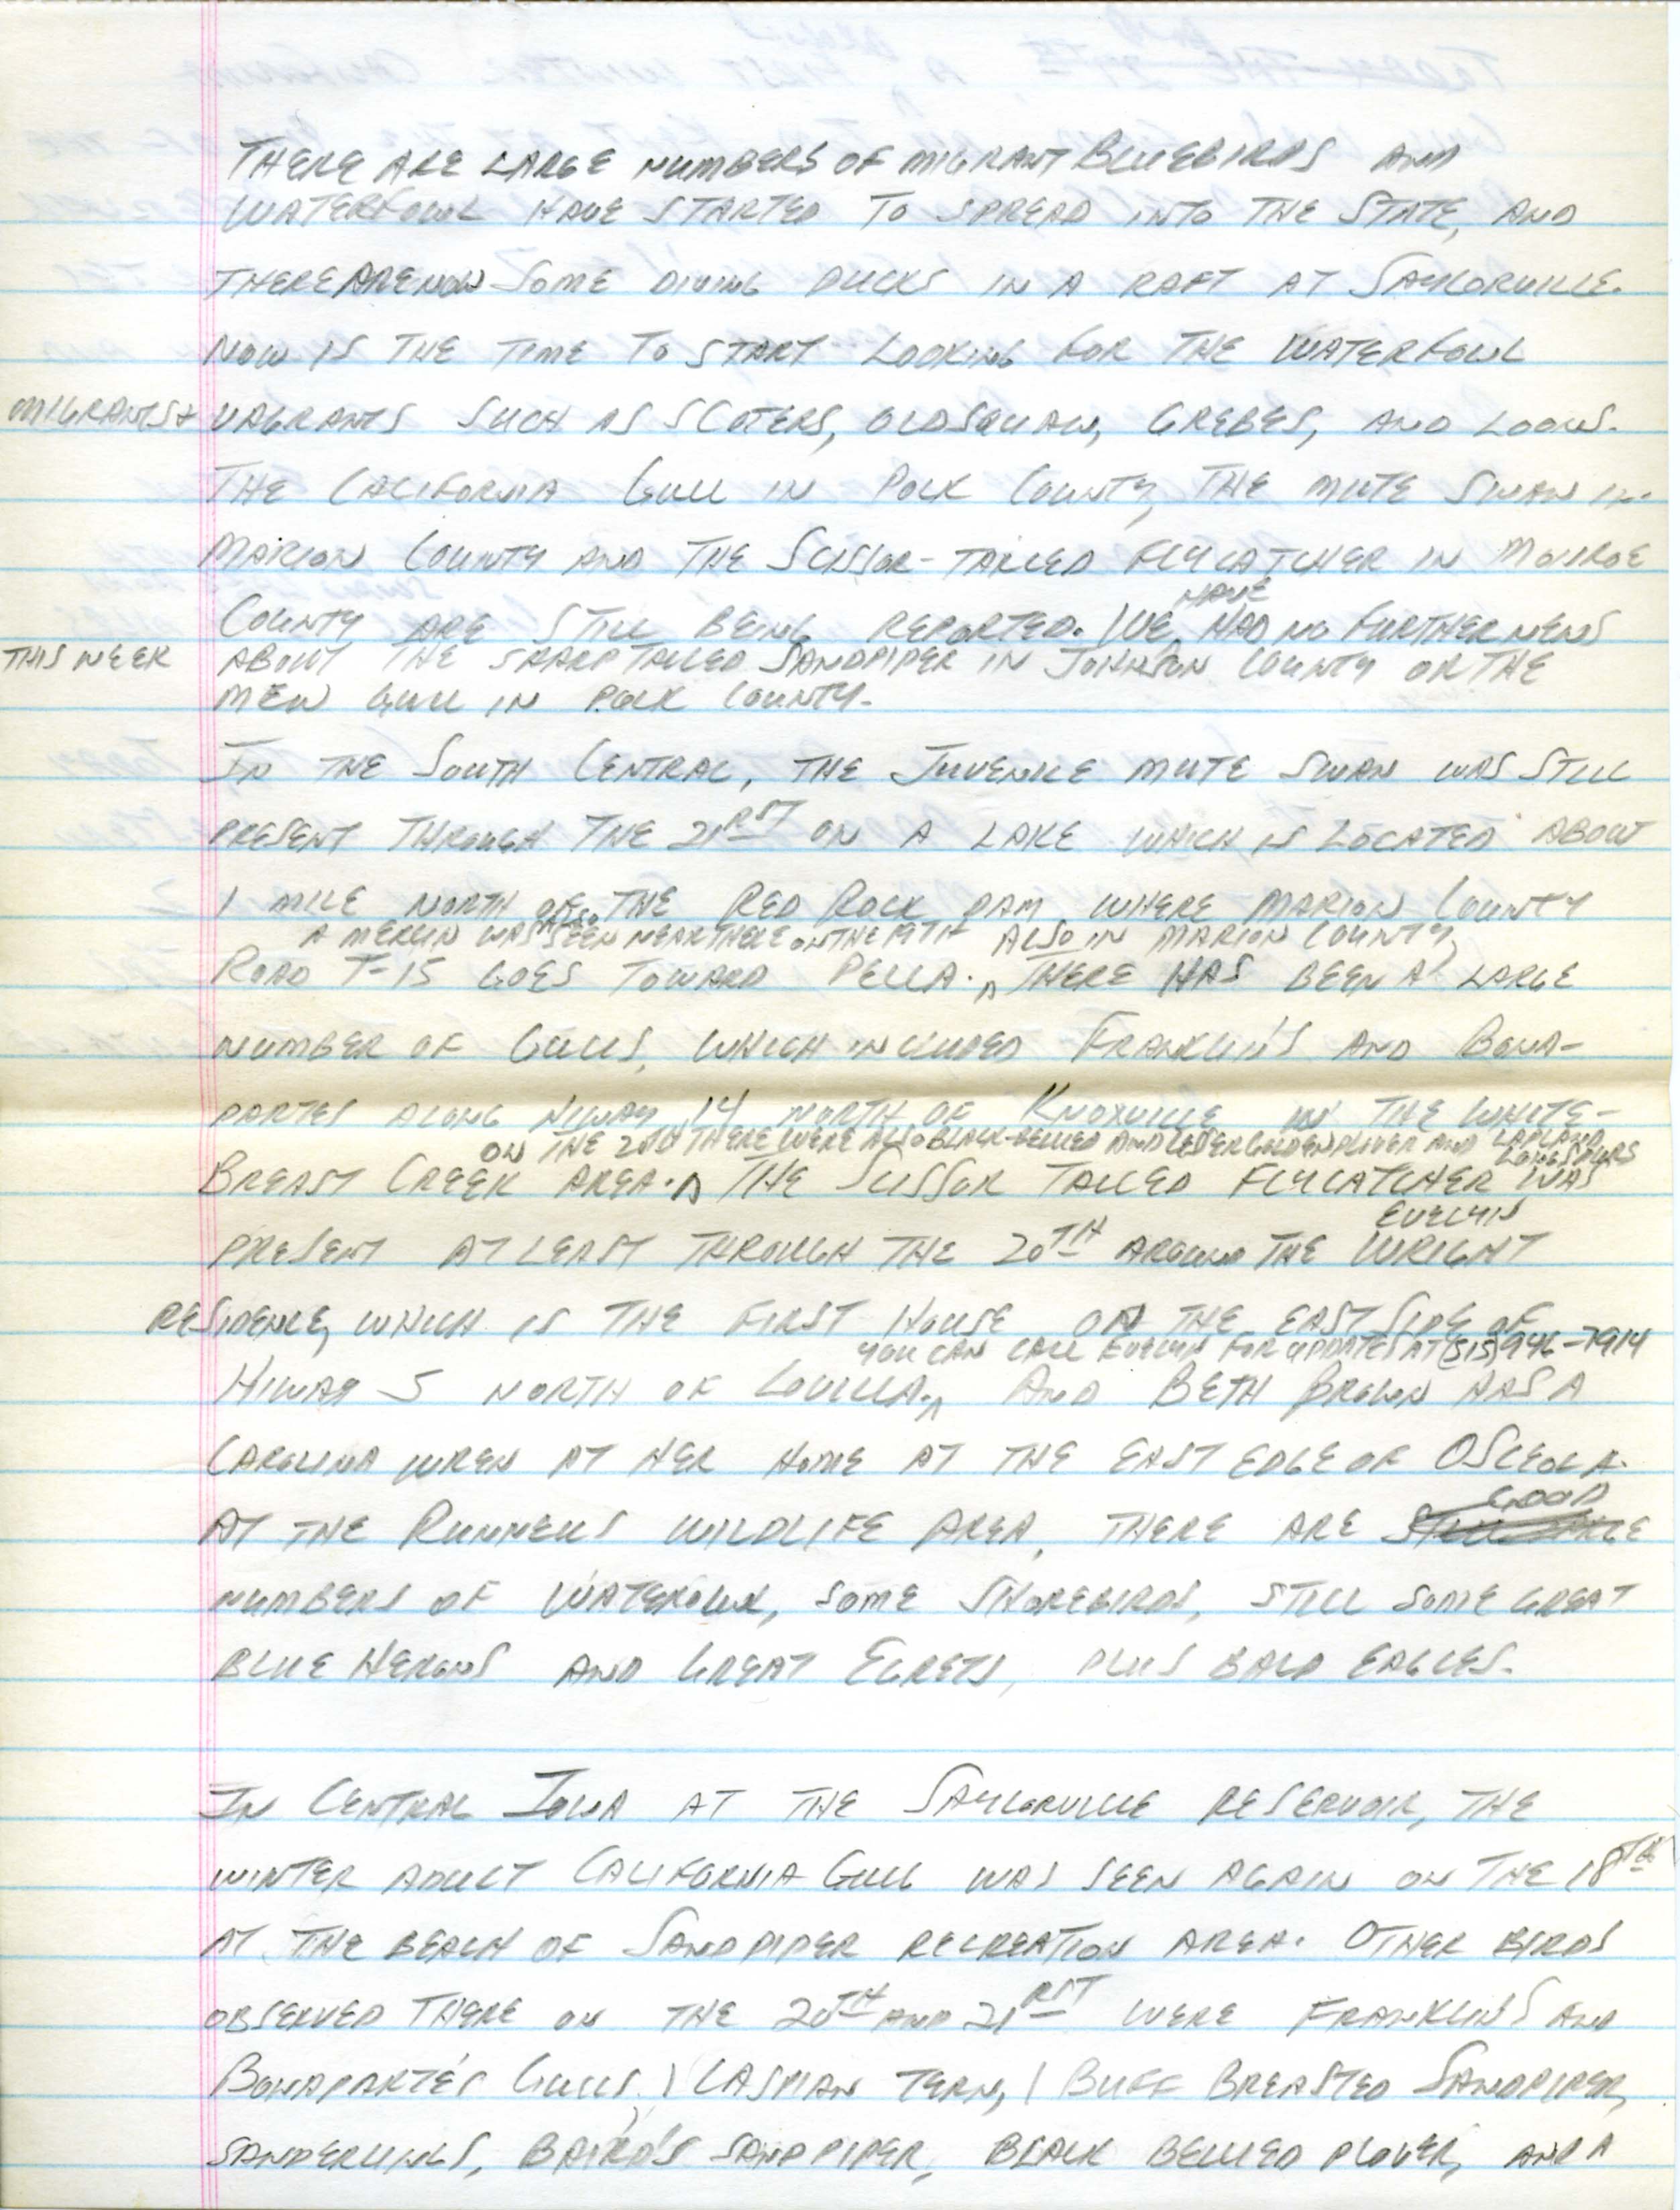 Iowa Birdline update, October 22, 1990, notes